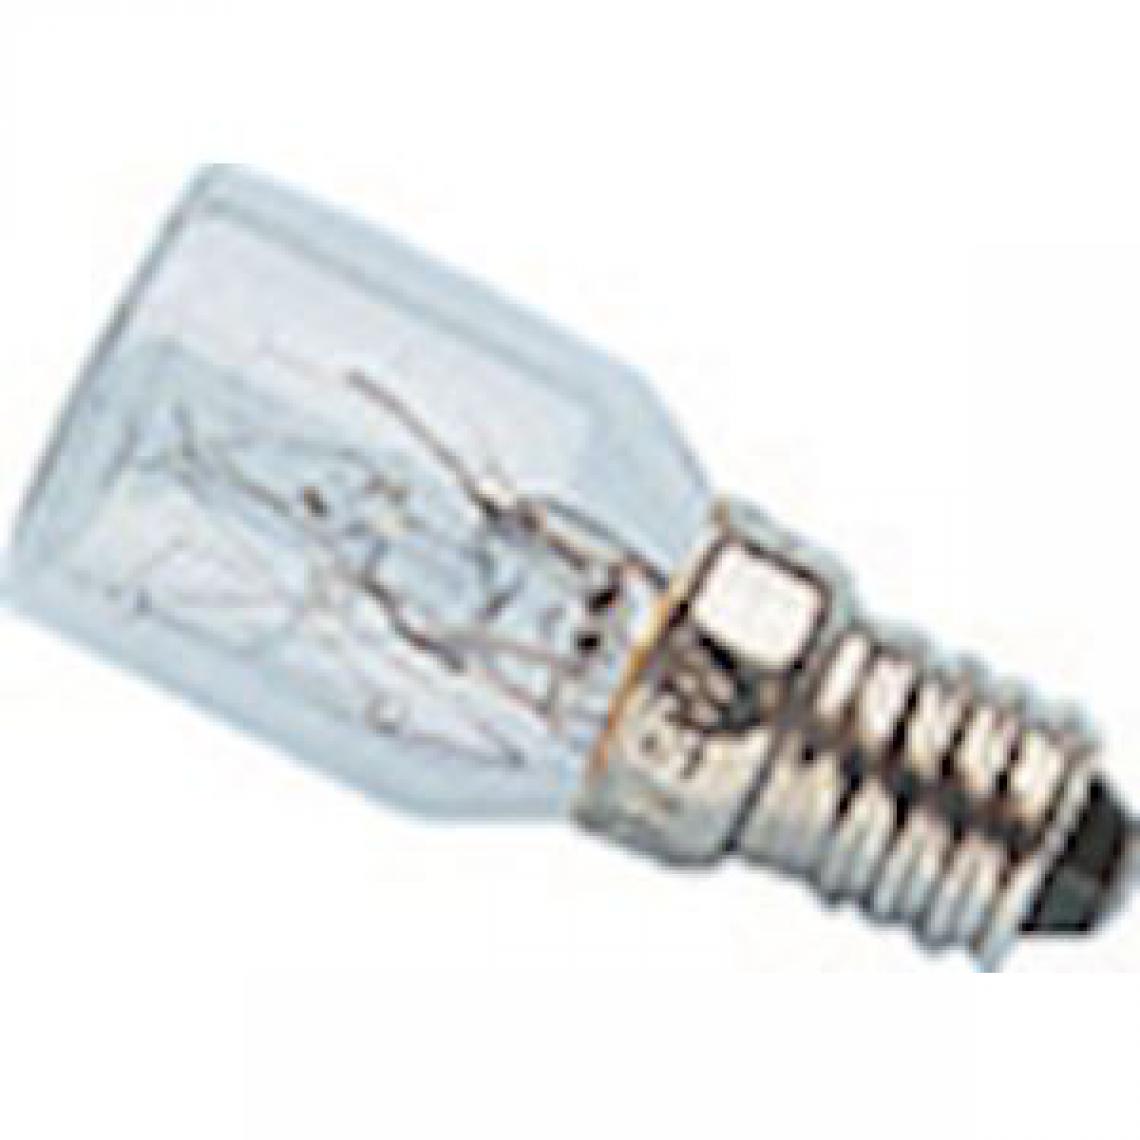 Orbitec - lampe miniature - 16 x 35 - 255 volts - 5 watts - orbitec 117010 - Ampoules LED